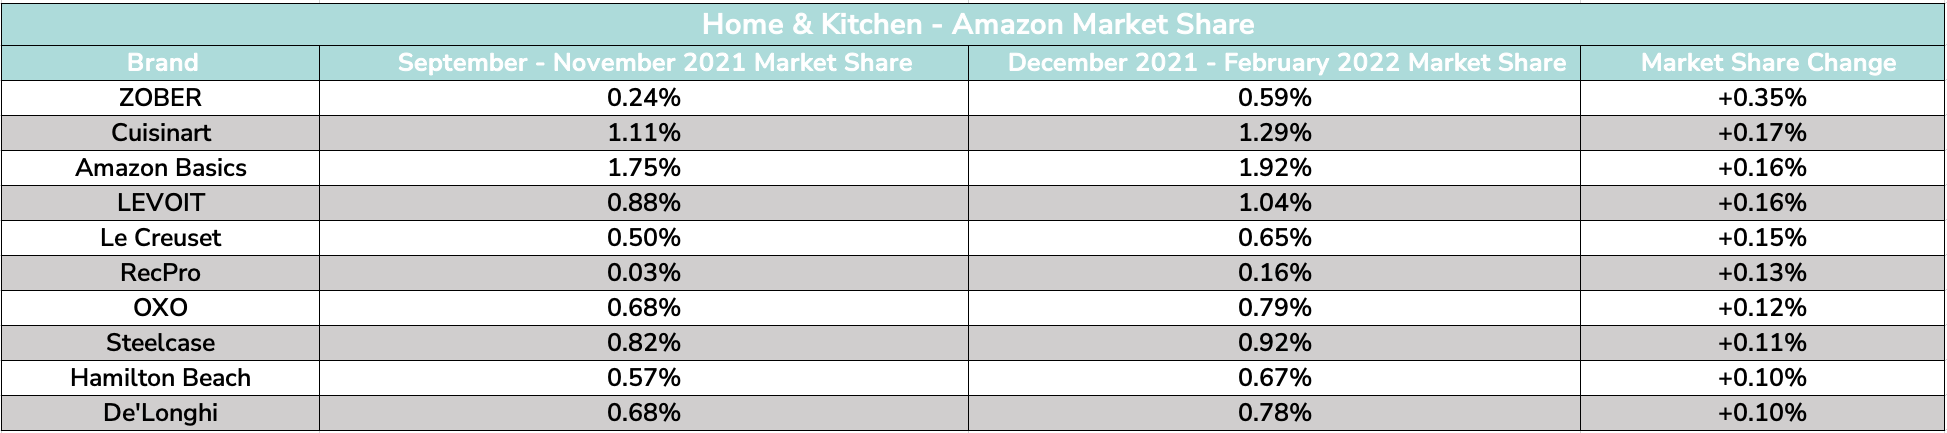 Home & Kitchen Amazon Market Share